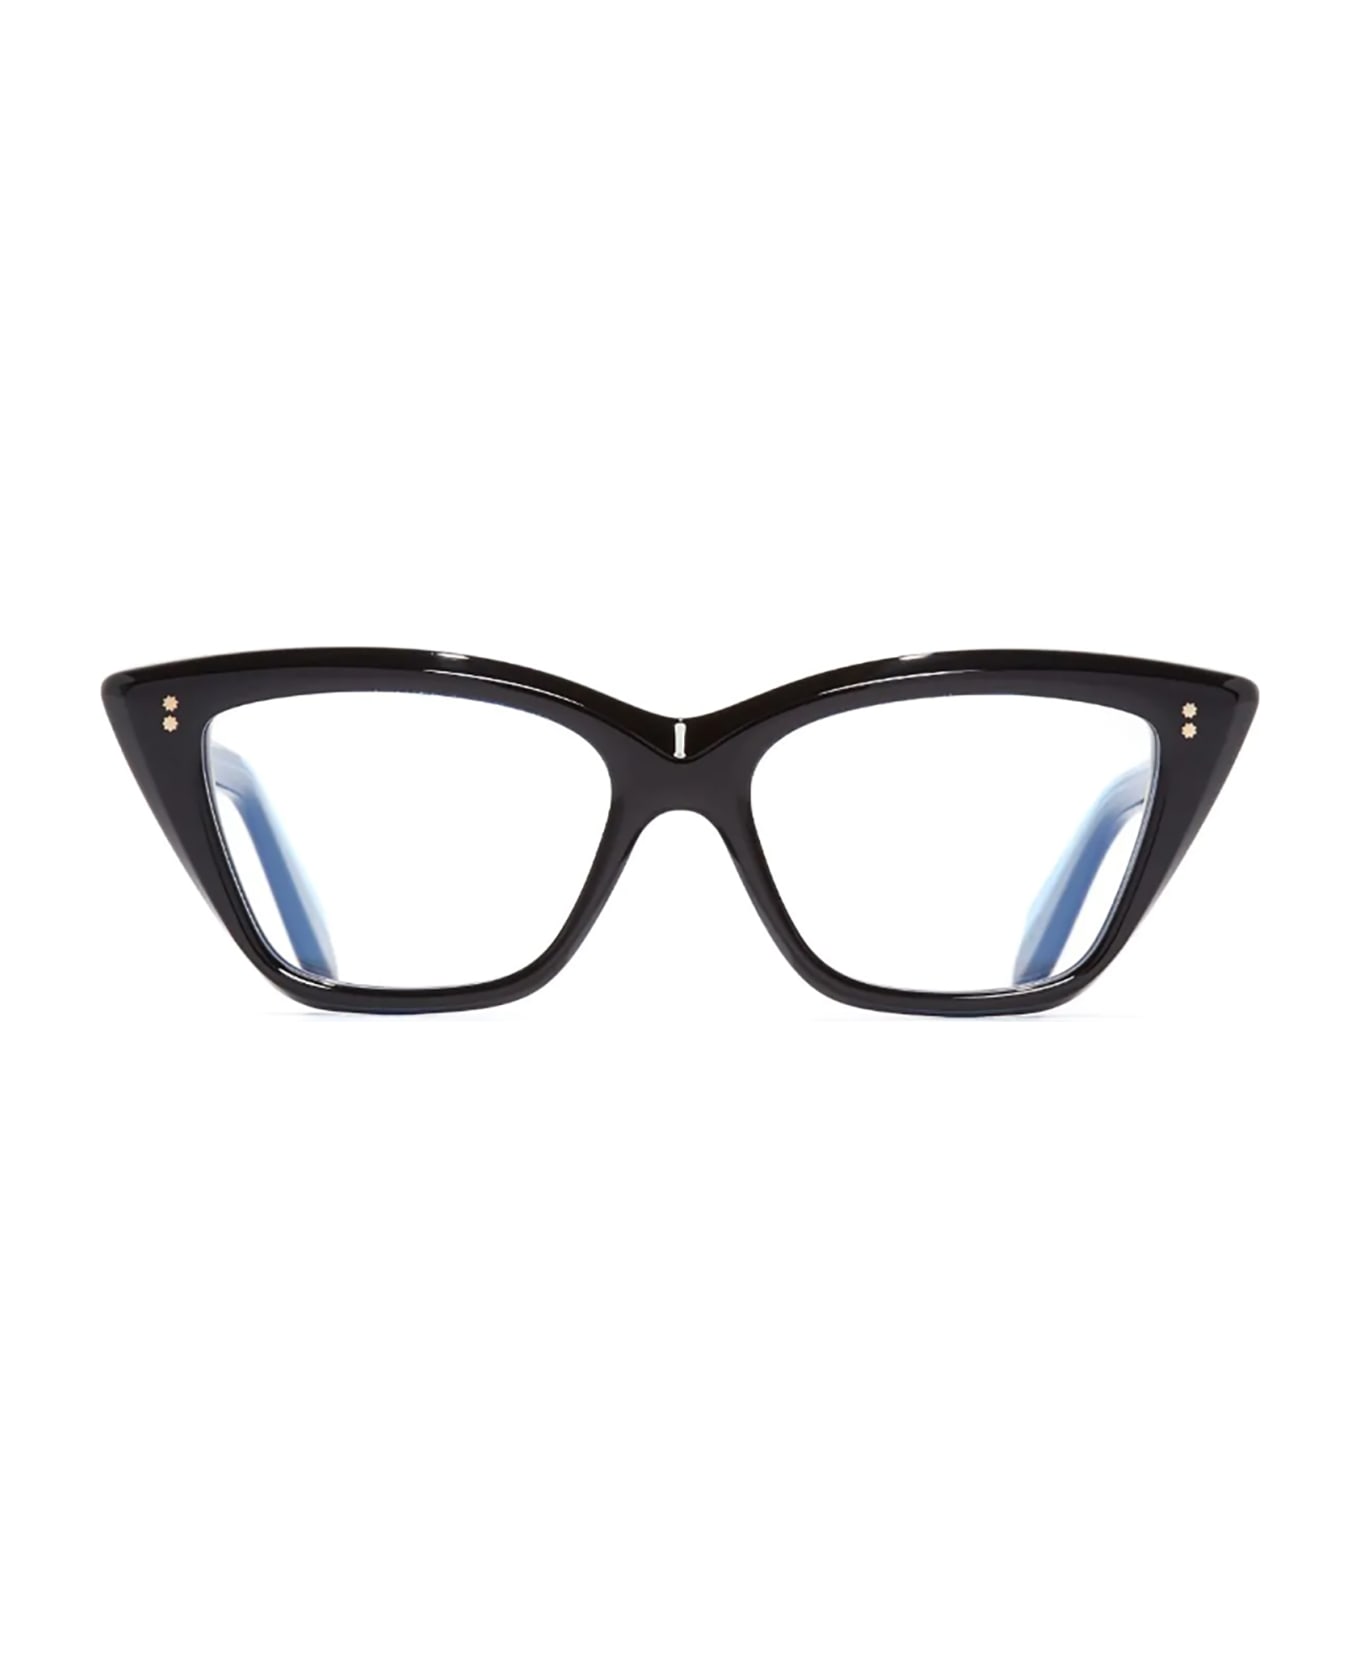 Cutler and Gross 9241 Eyewear - Blue On Black